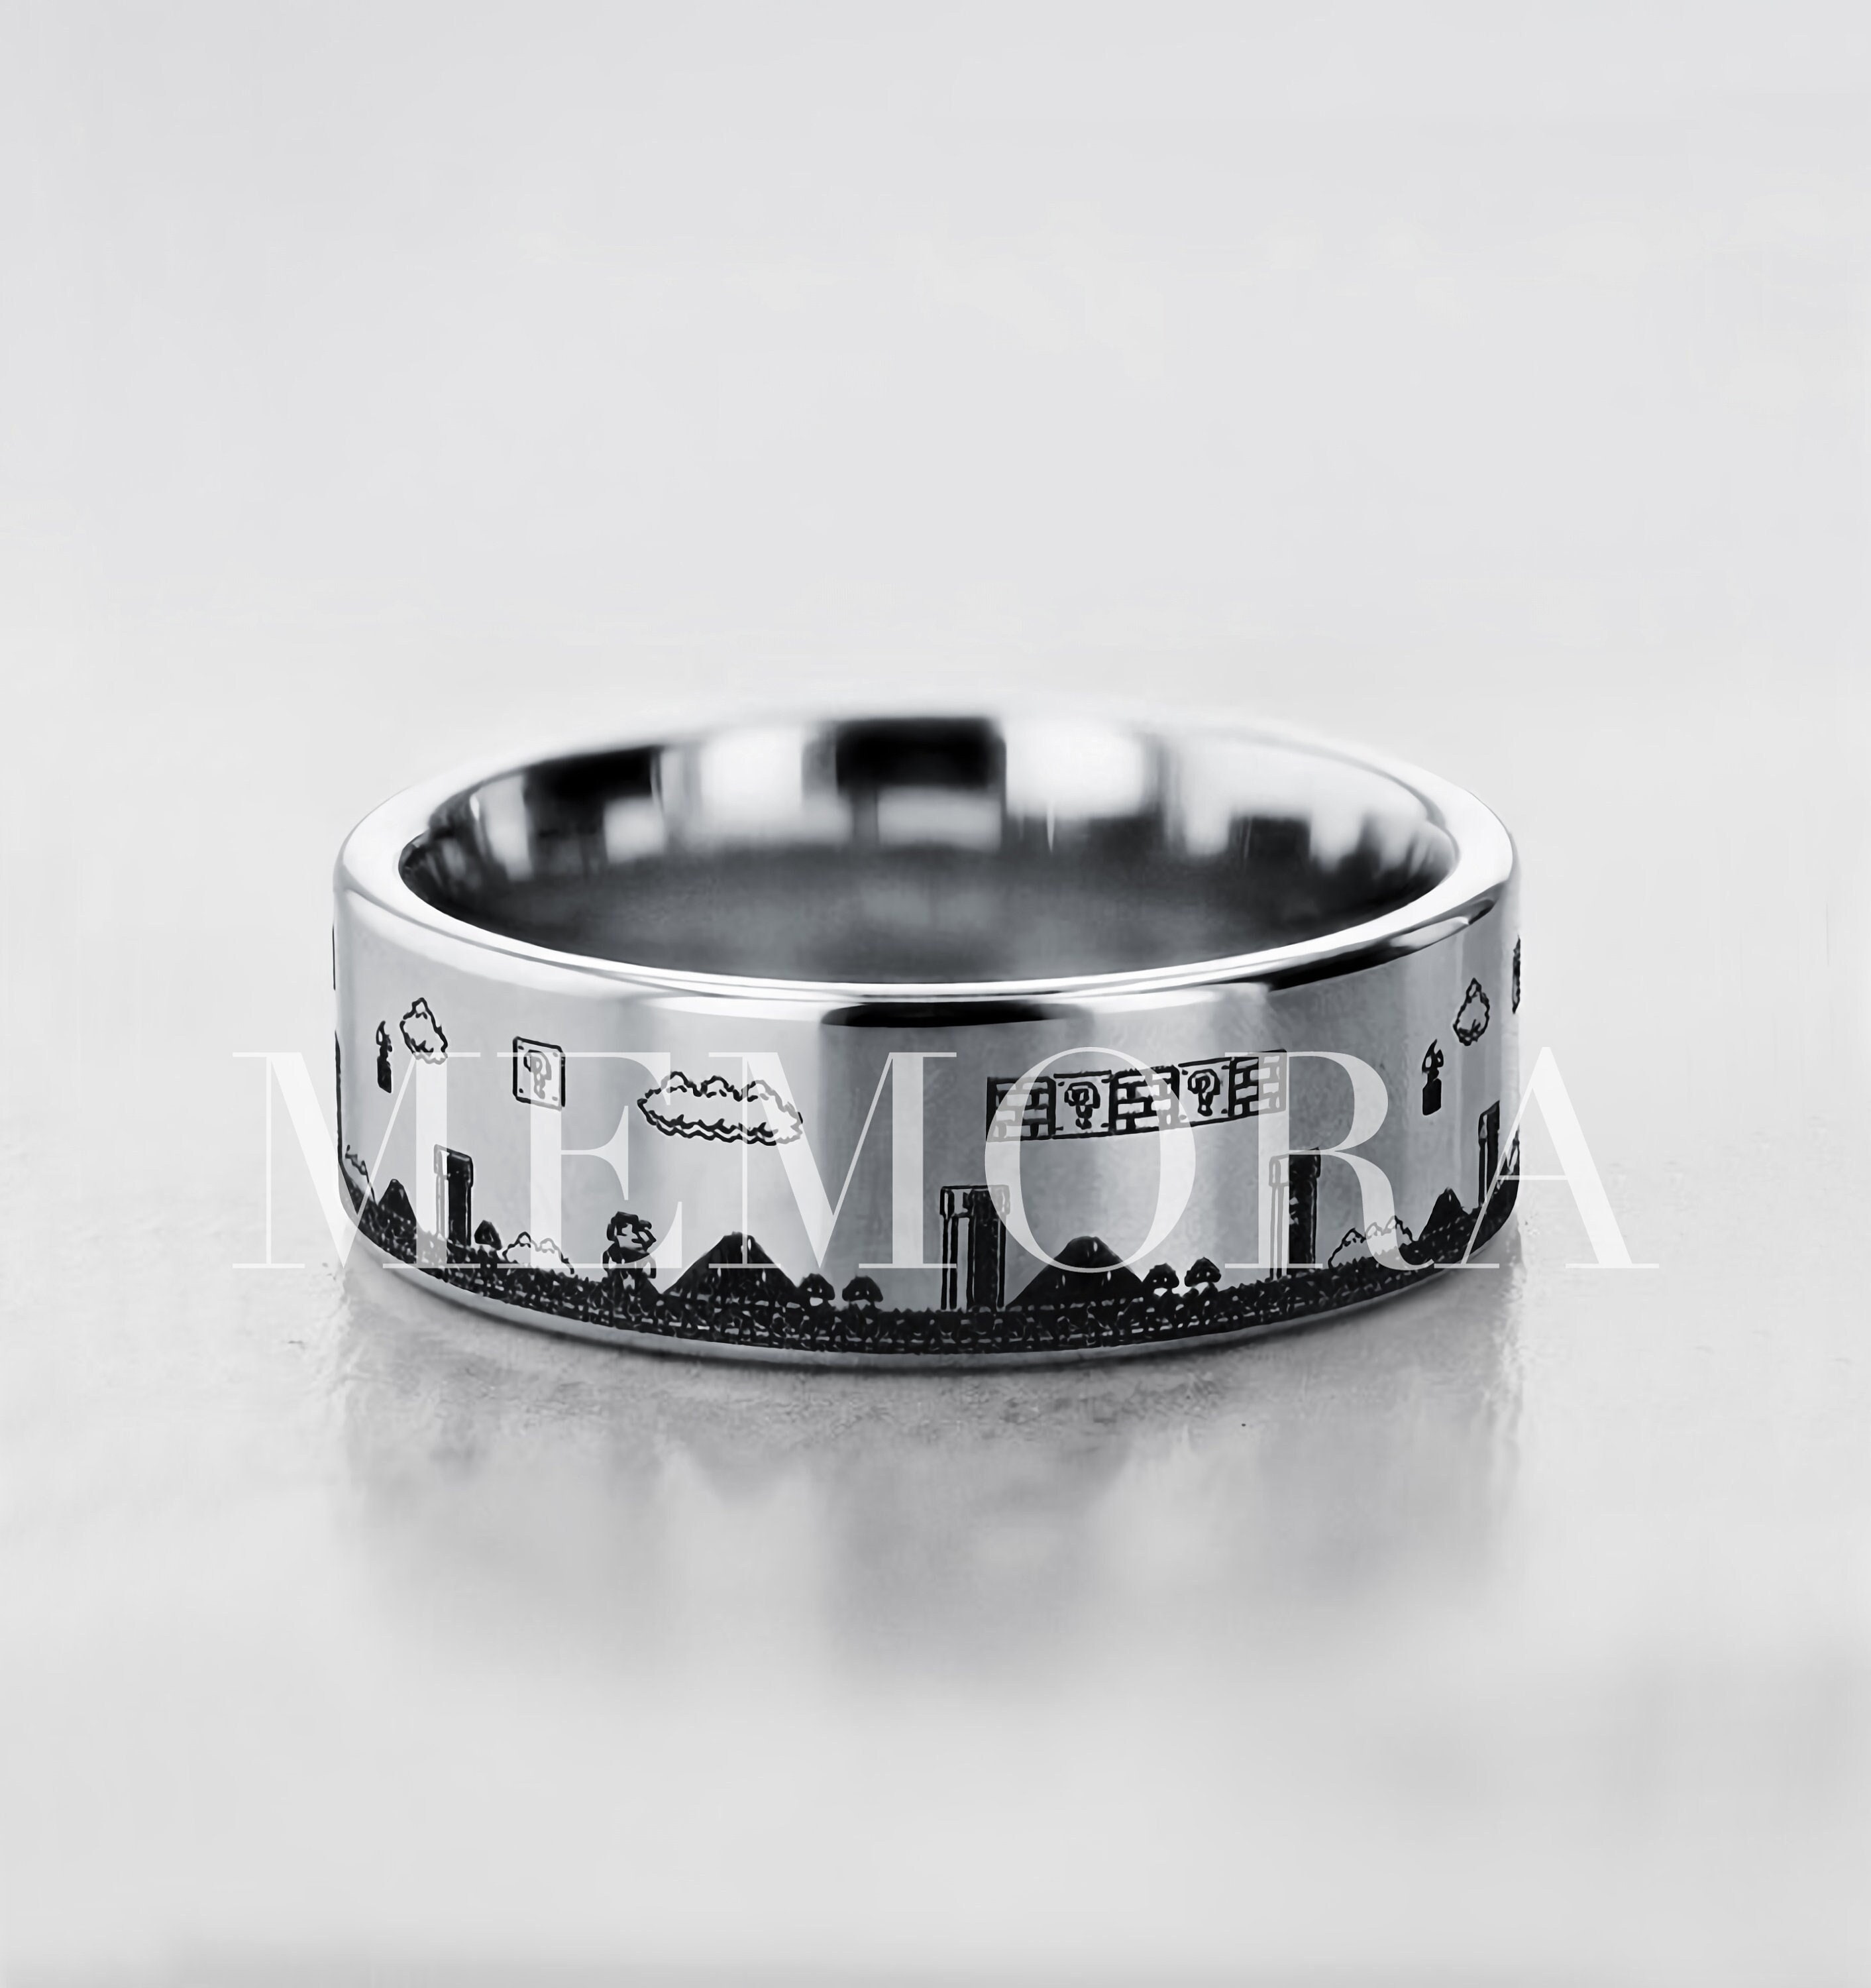 Geeky Rings | CustomMade.com | Geeky engagement rings, Nerdy engagement  rings, Nerdy wedding bands